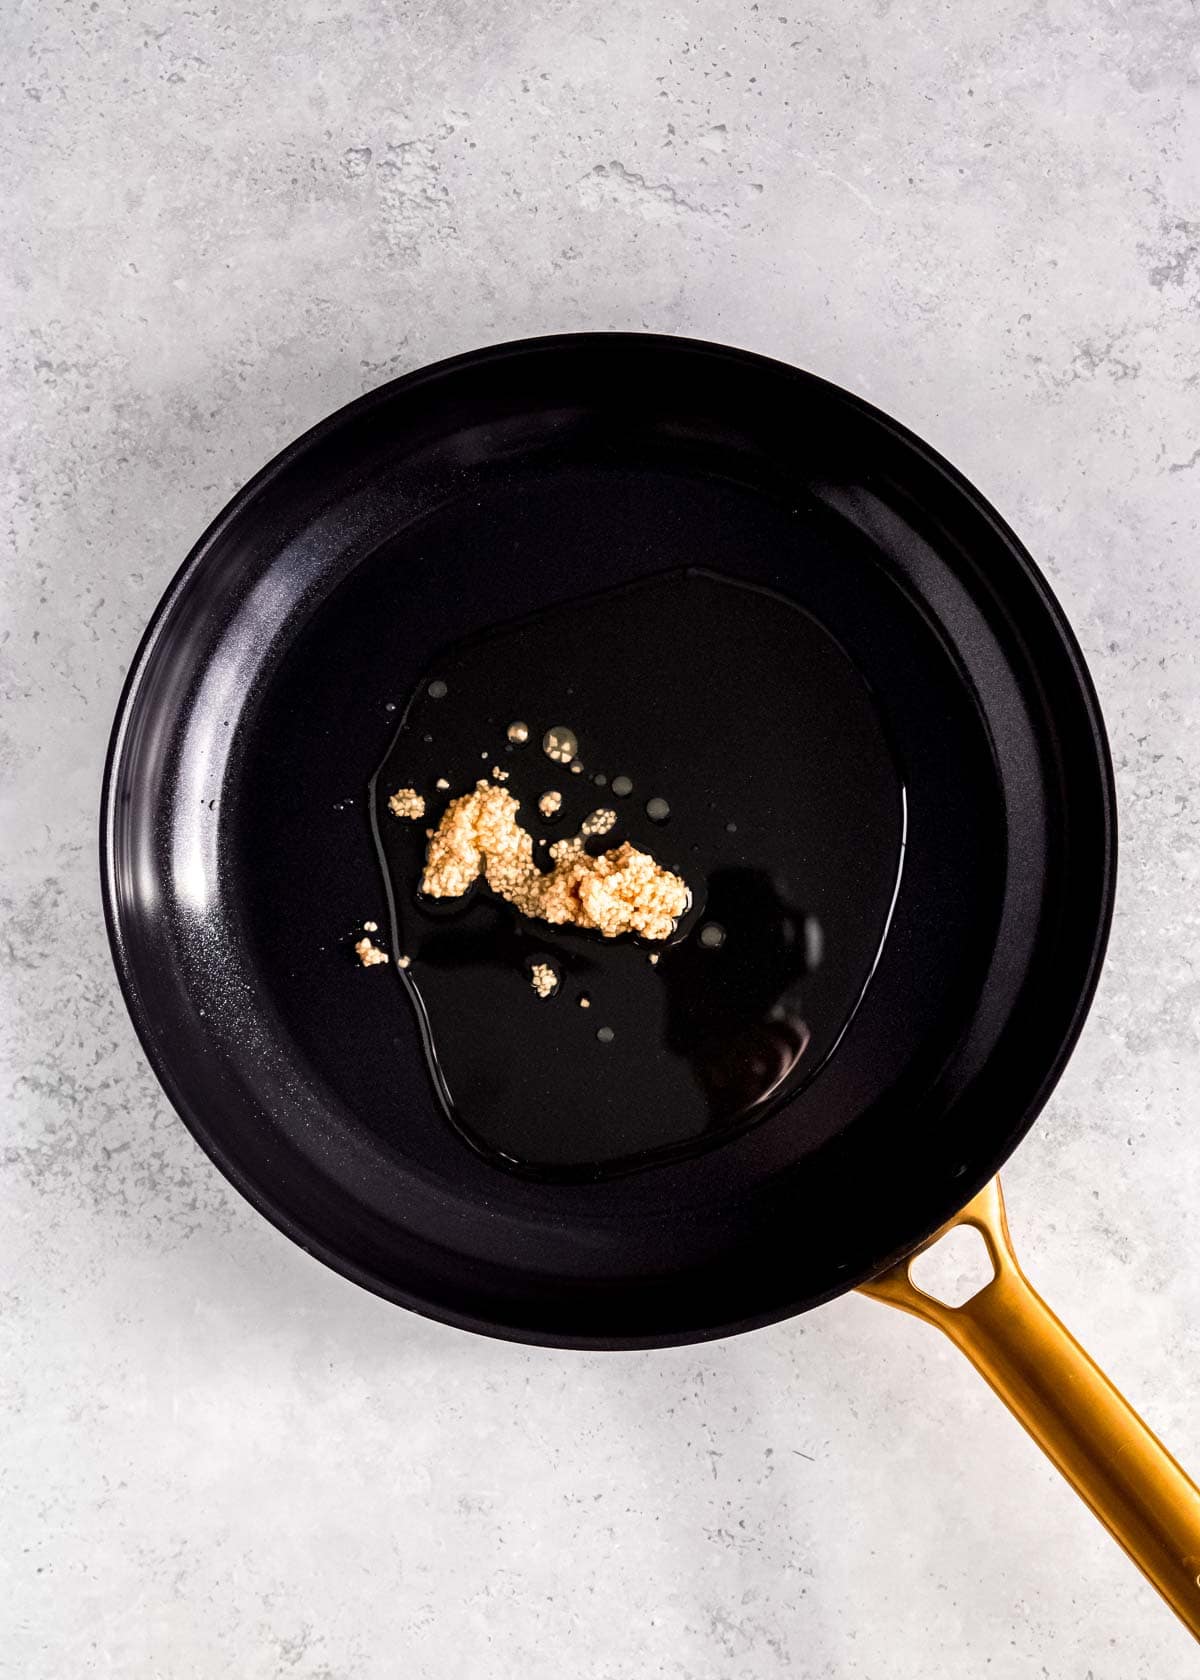 garlic sauteing in sesame oil in a skillet